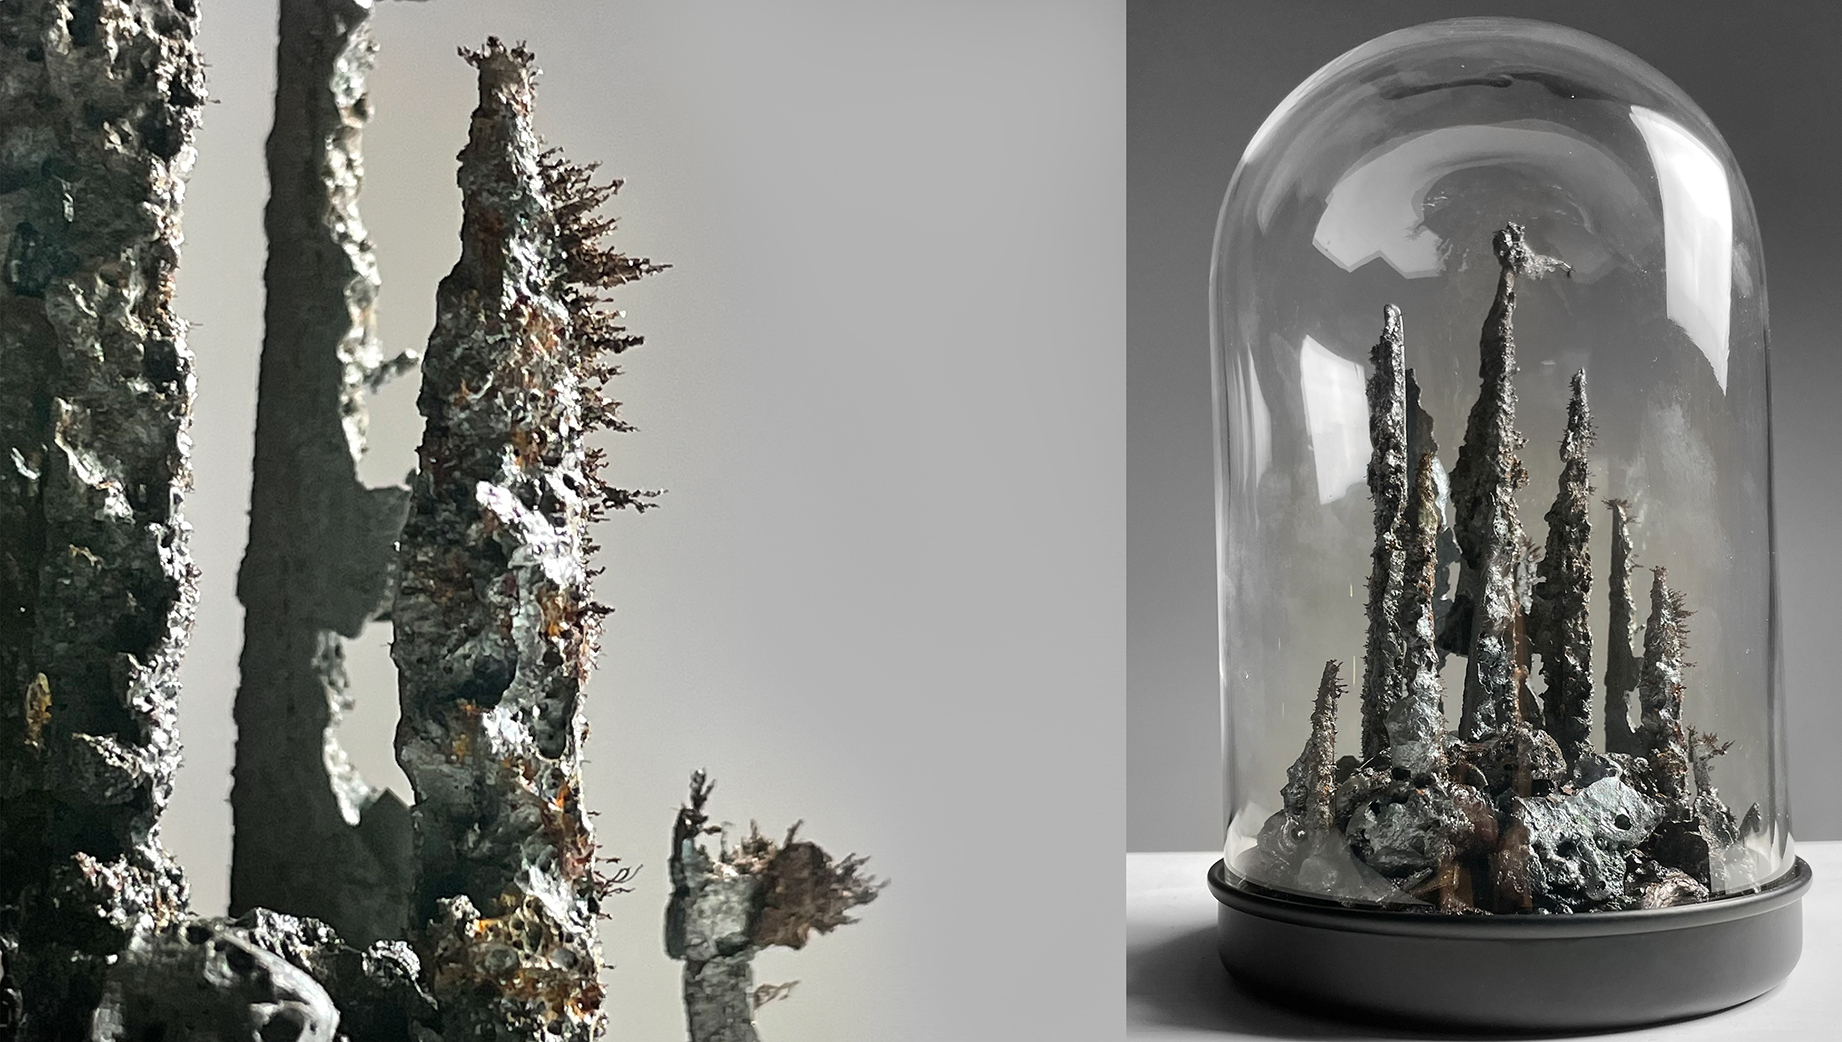 cheryl chiw microverse minutiae sculpture neodymum magnet iron oxide steel fragment glass cloche